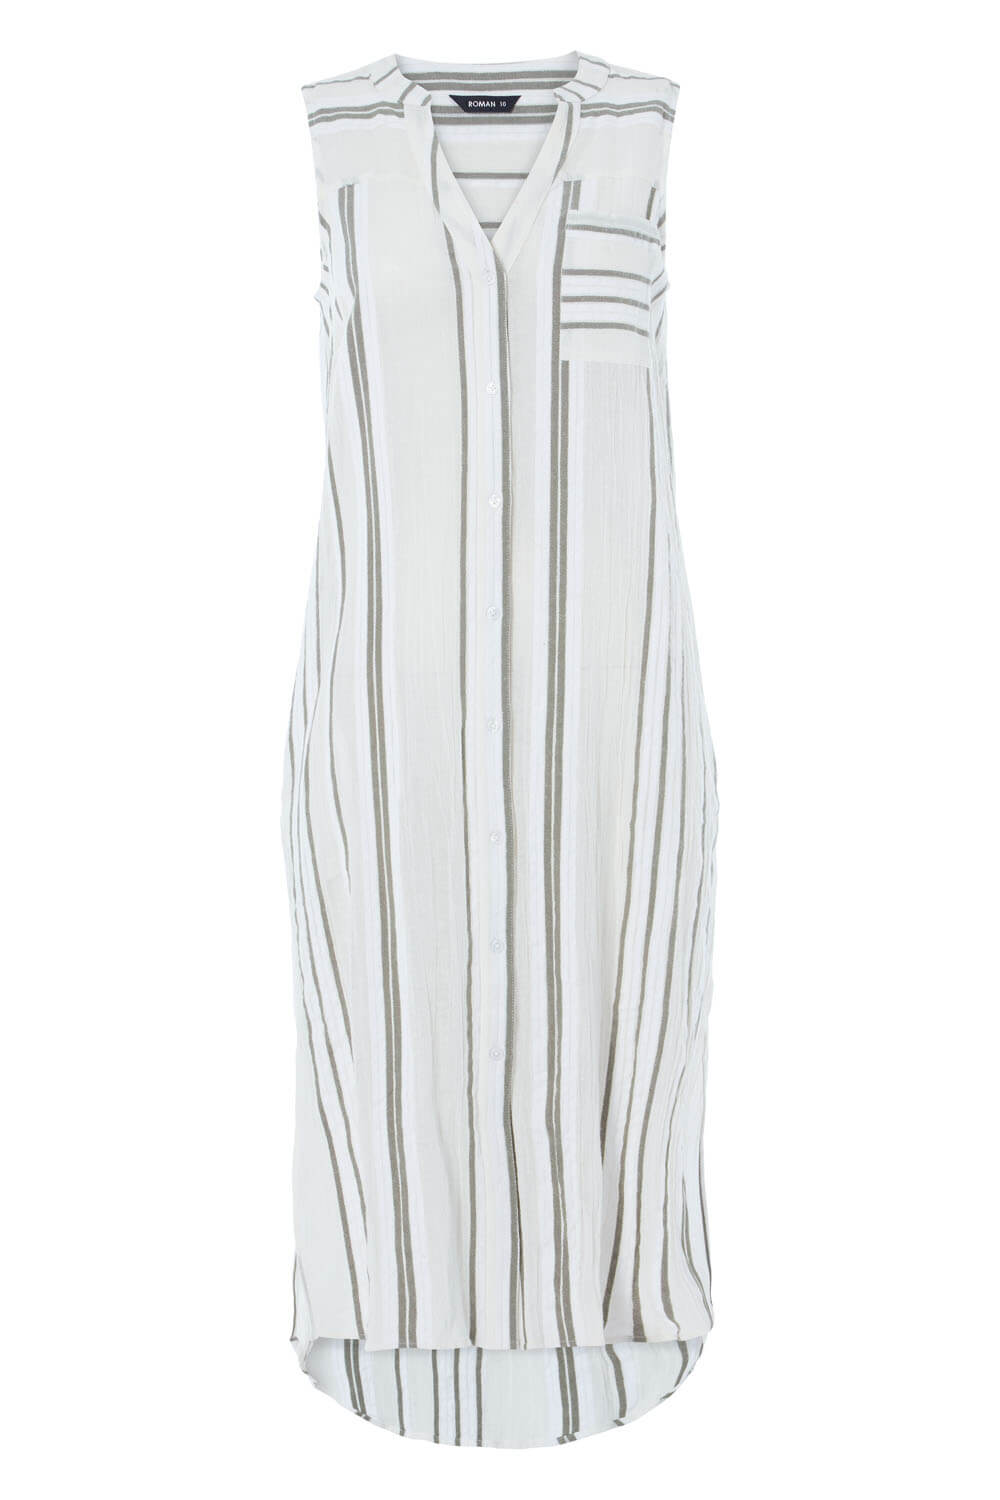 KHAKI Stripe A line Shift Dress , Image 5 of 5